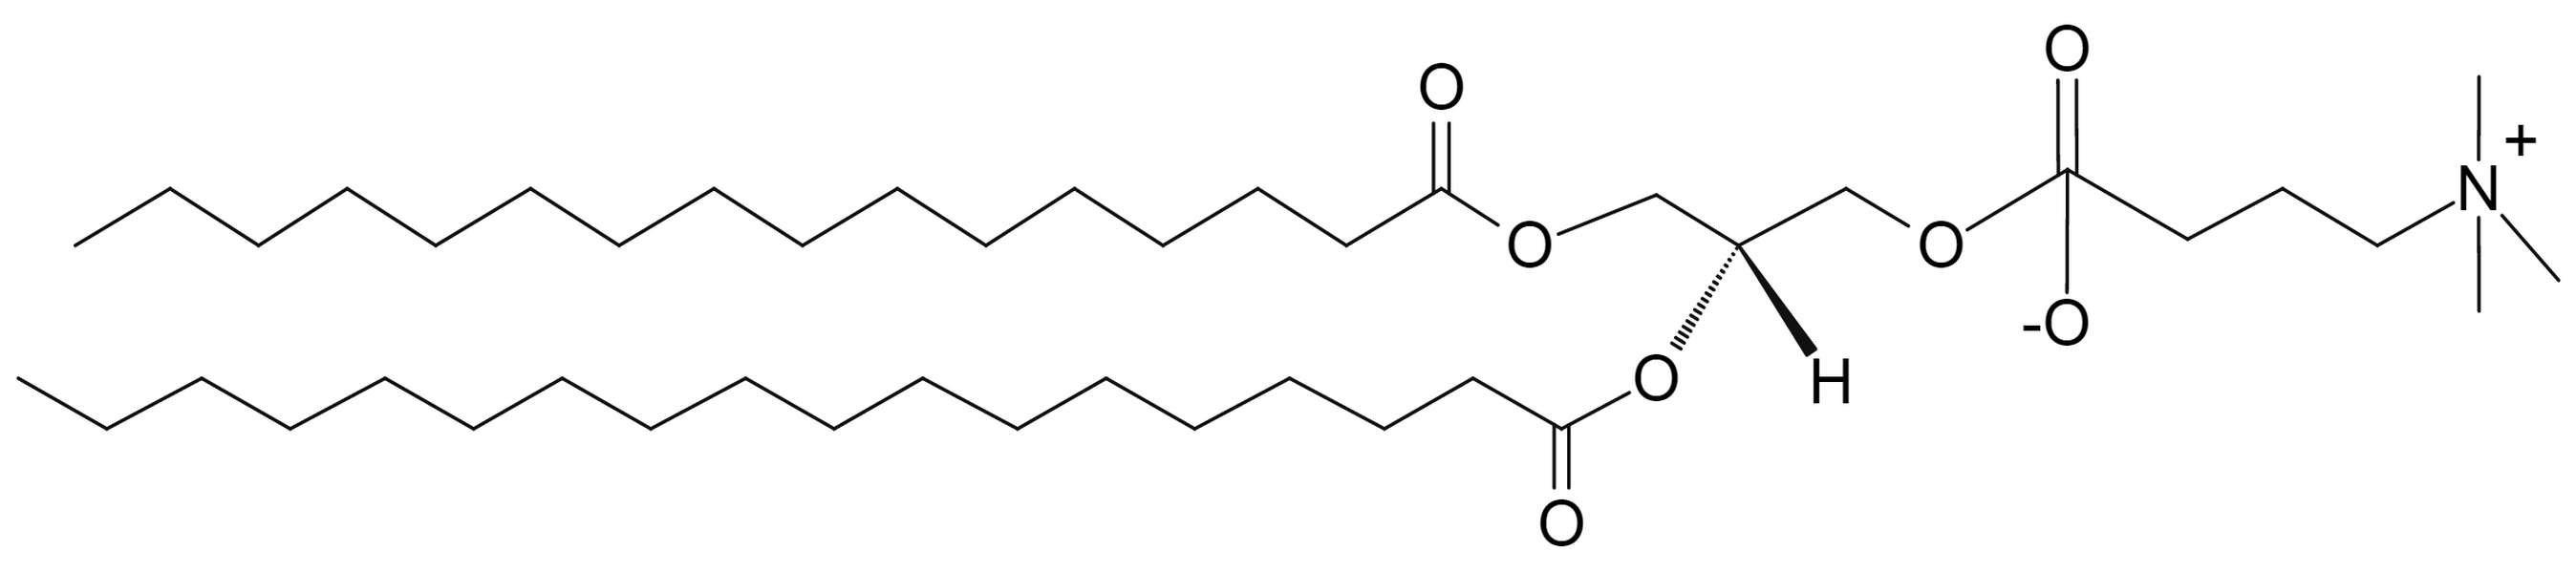 1-Palmitoyl-2-stearoyl-sn-glycero-3-phosphocholine